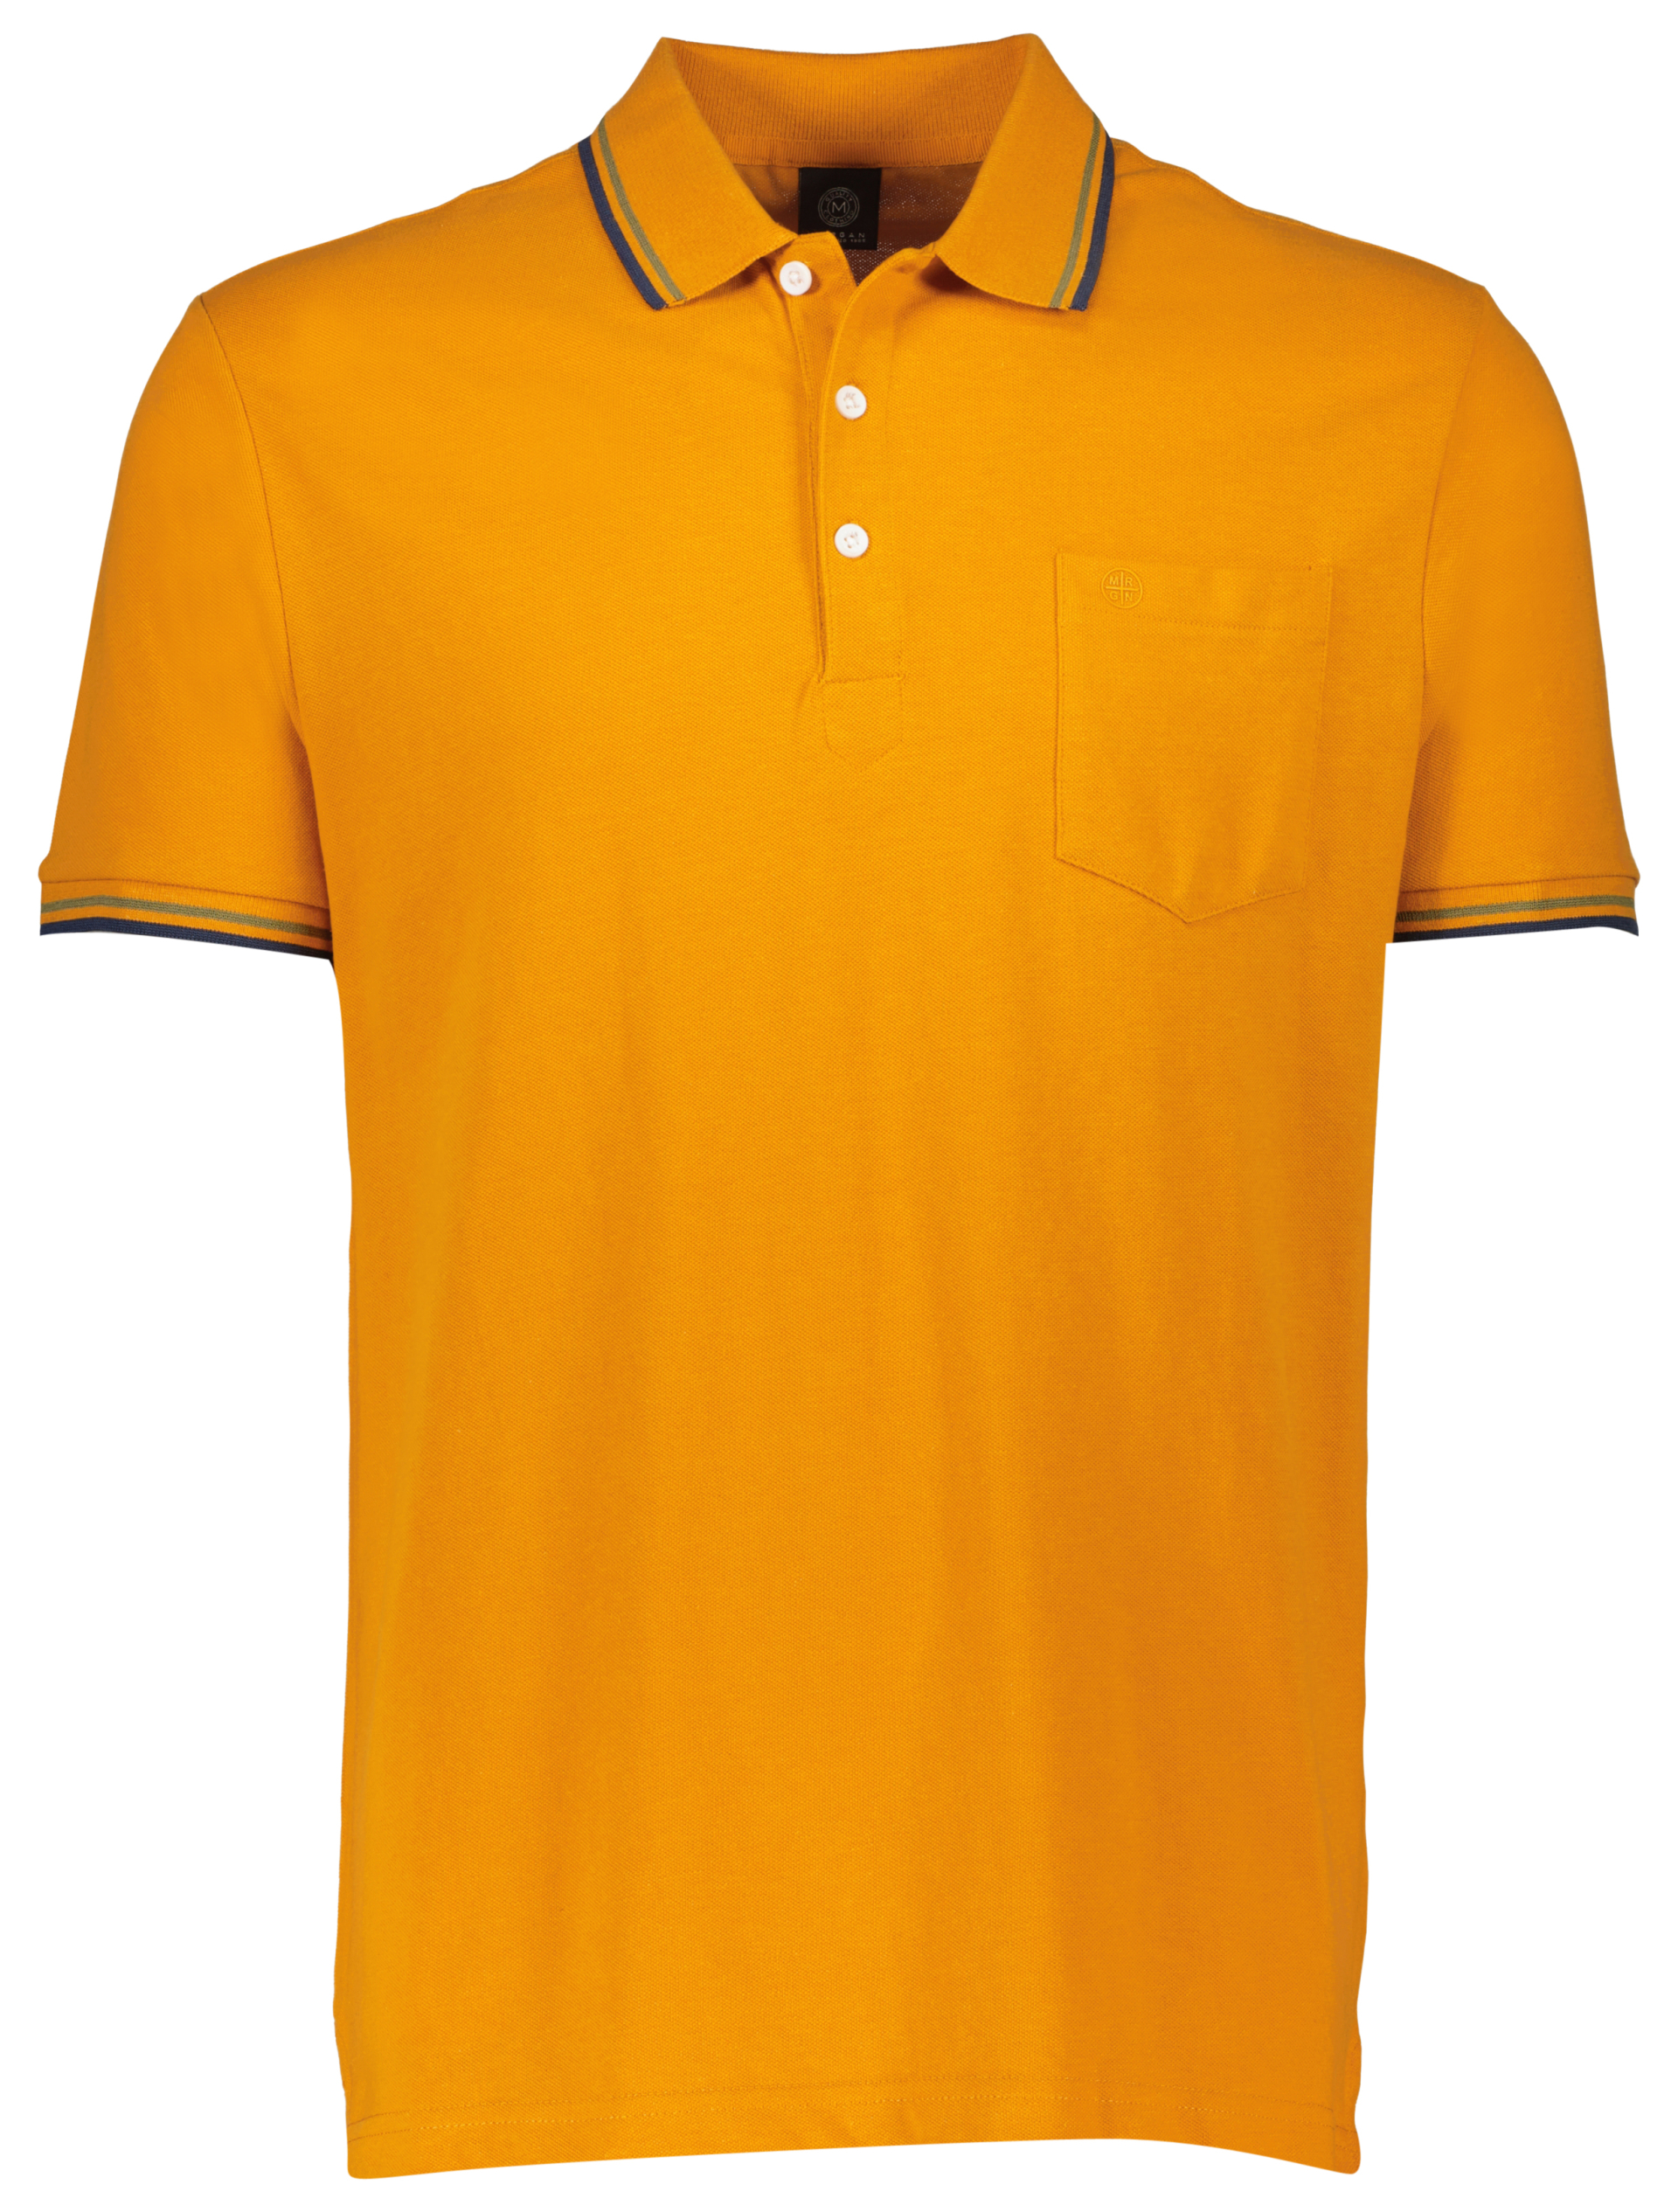 Morgan Poloshirt orange / lt orange